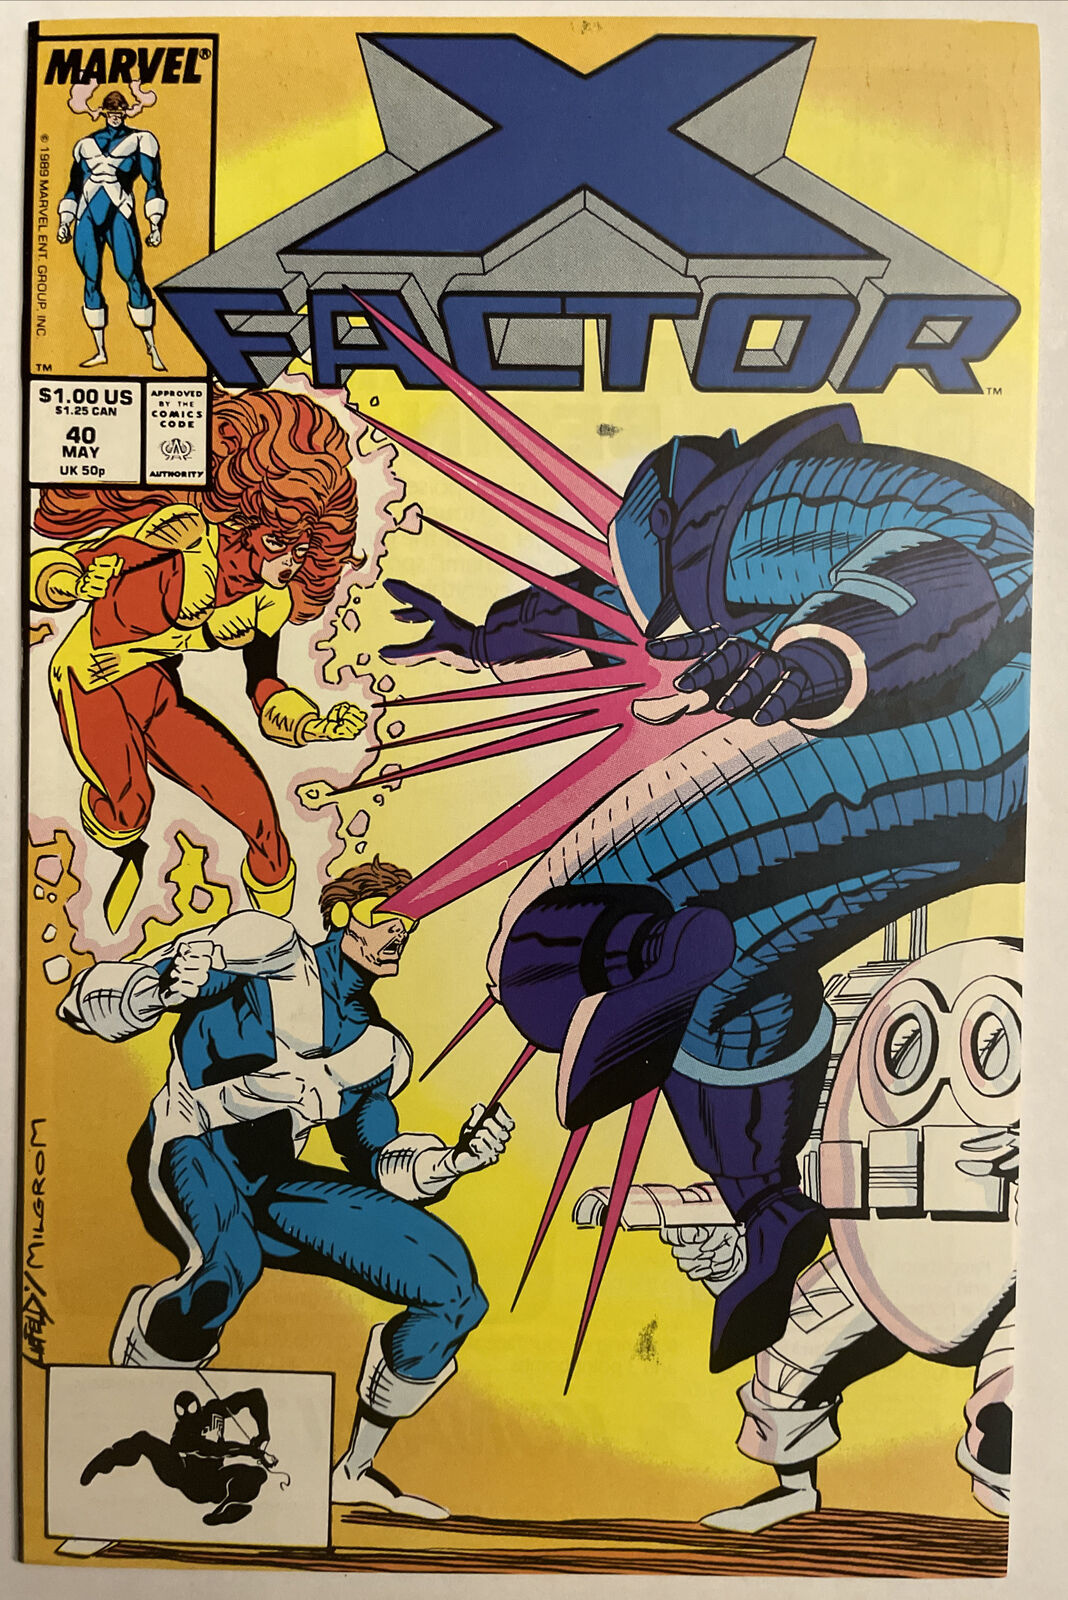 X-Factor #40 • Liefeld Cover & Art  (1987, Marvel)